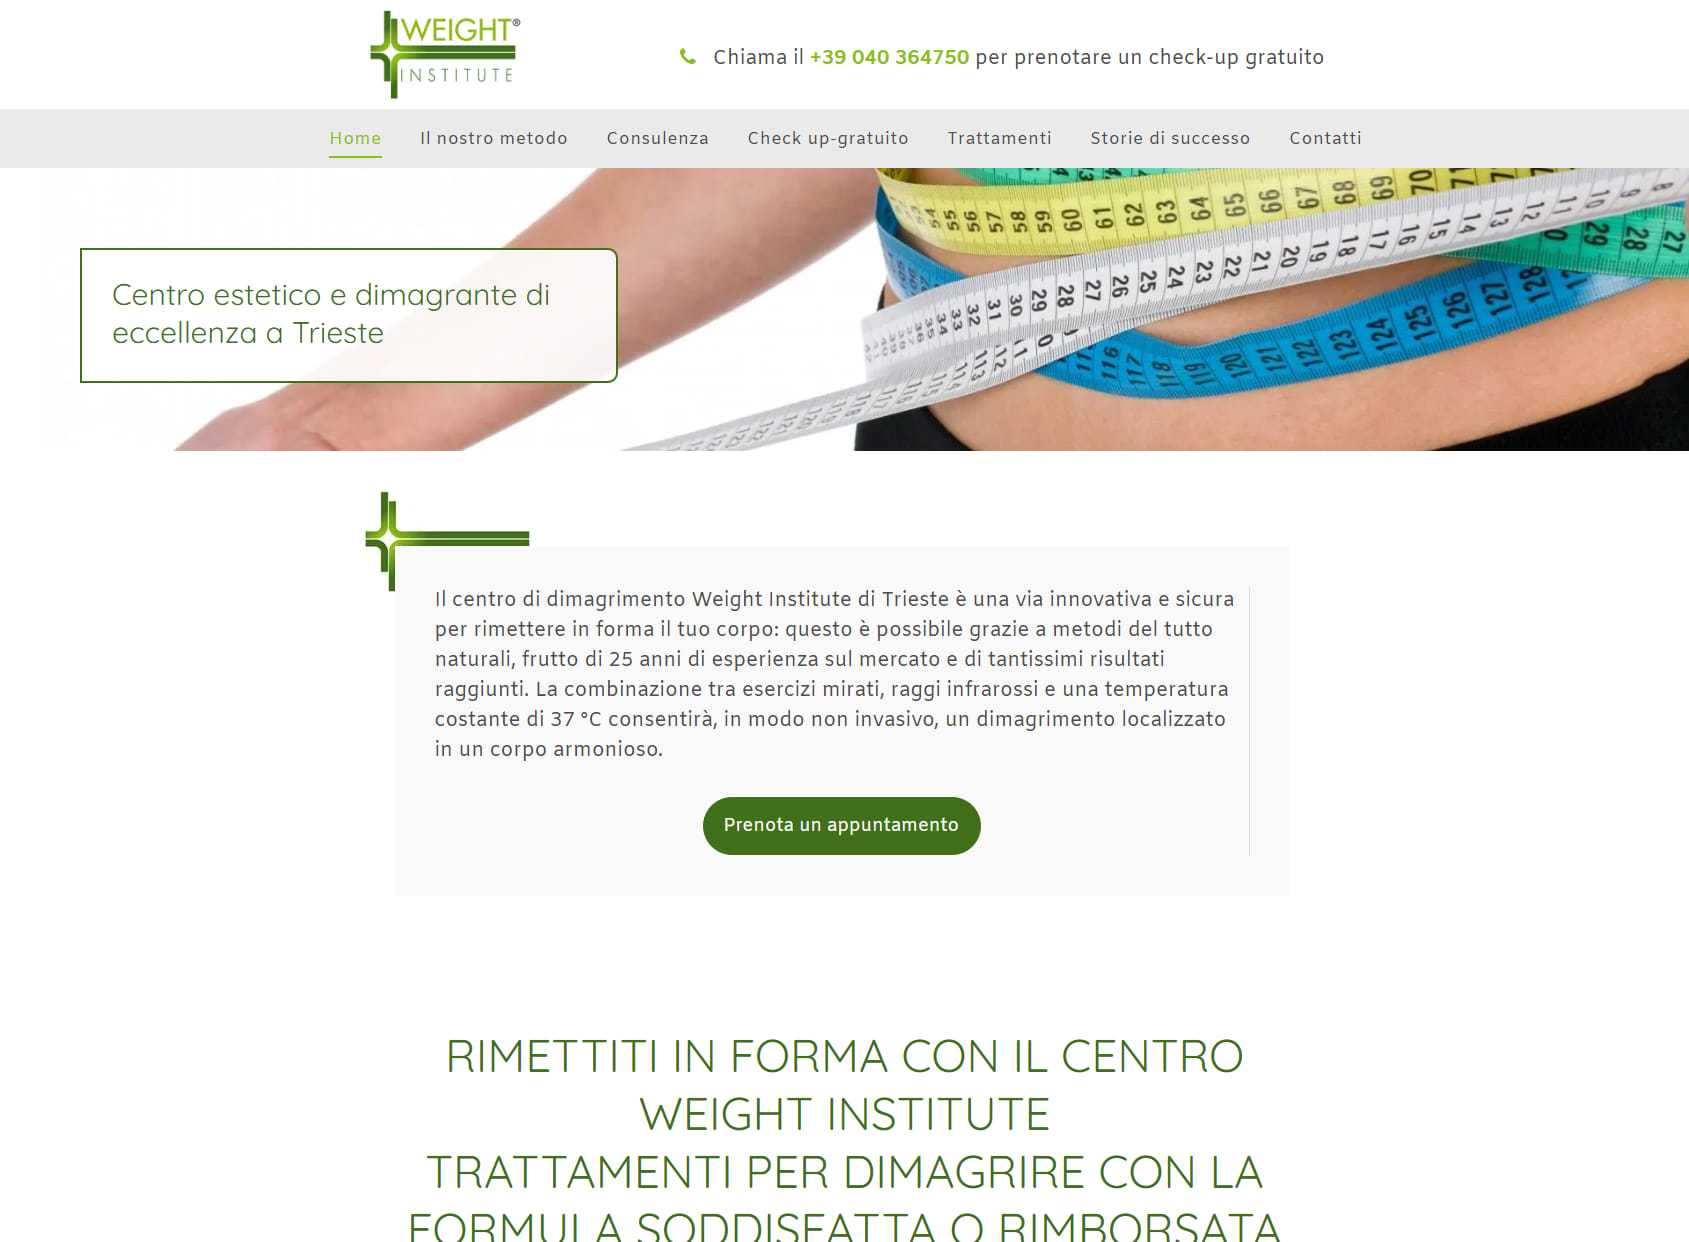 Weight Institute Trieste